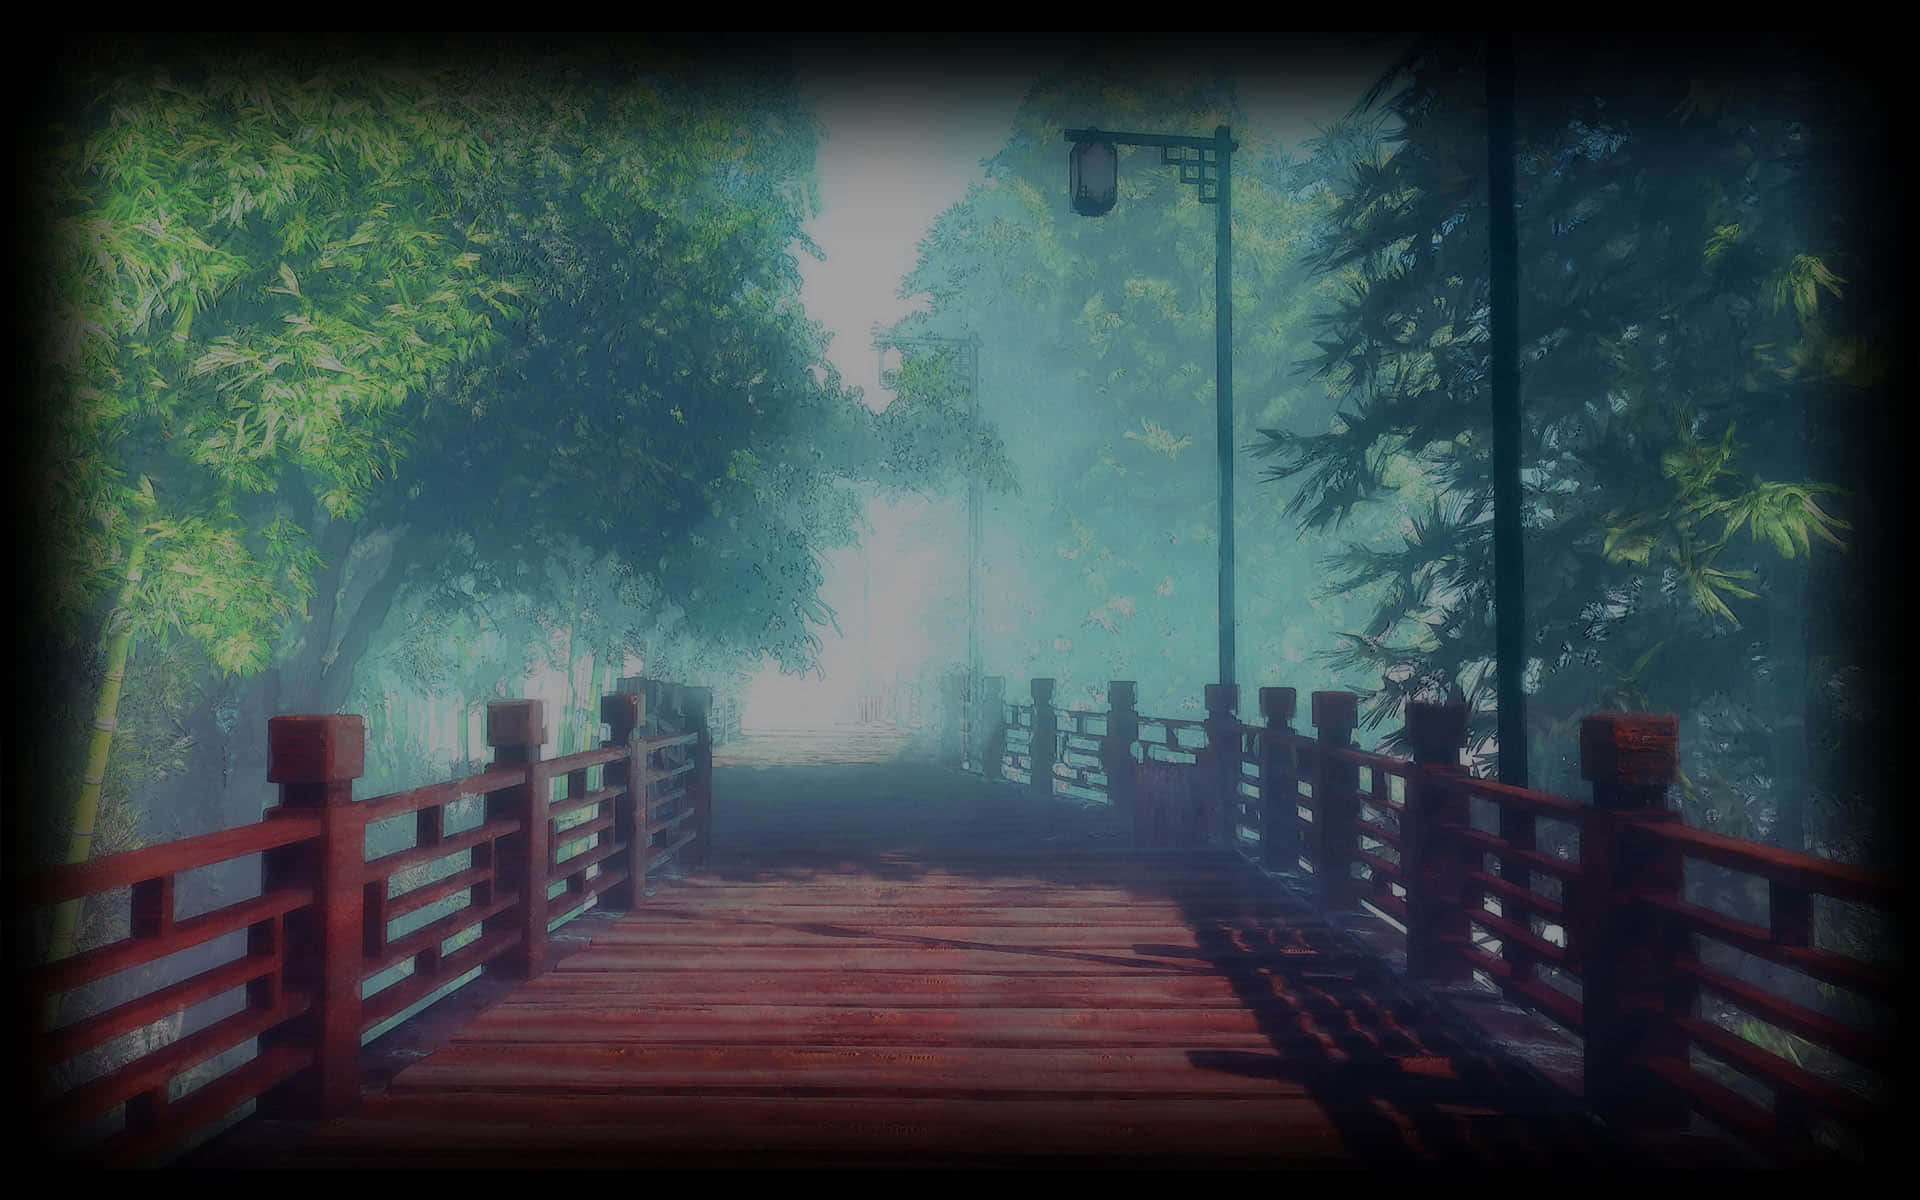 A Wooden Bridge In The Fog